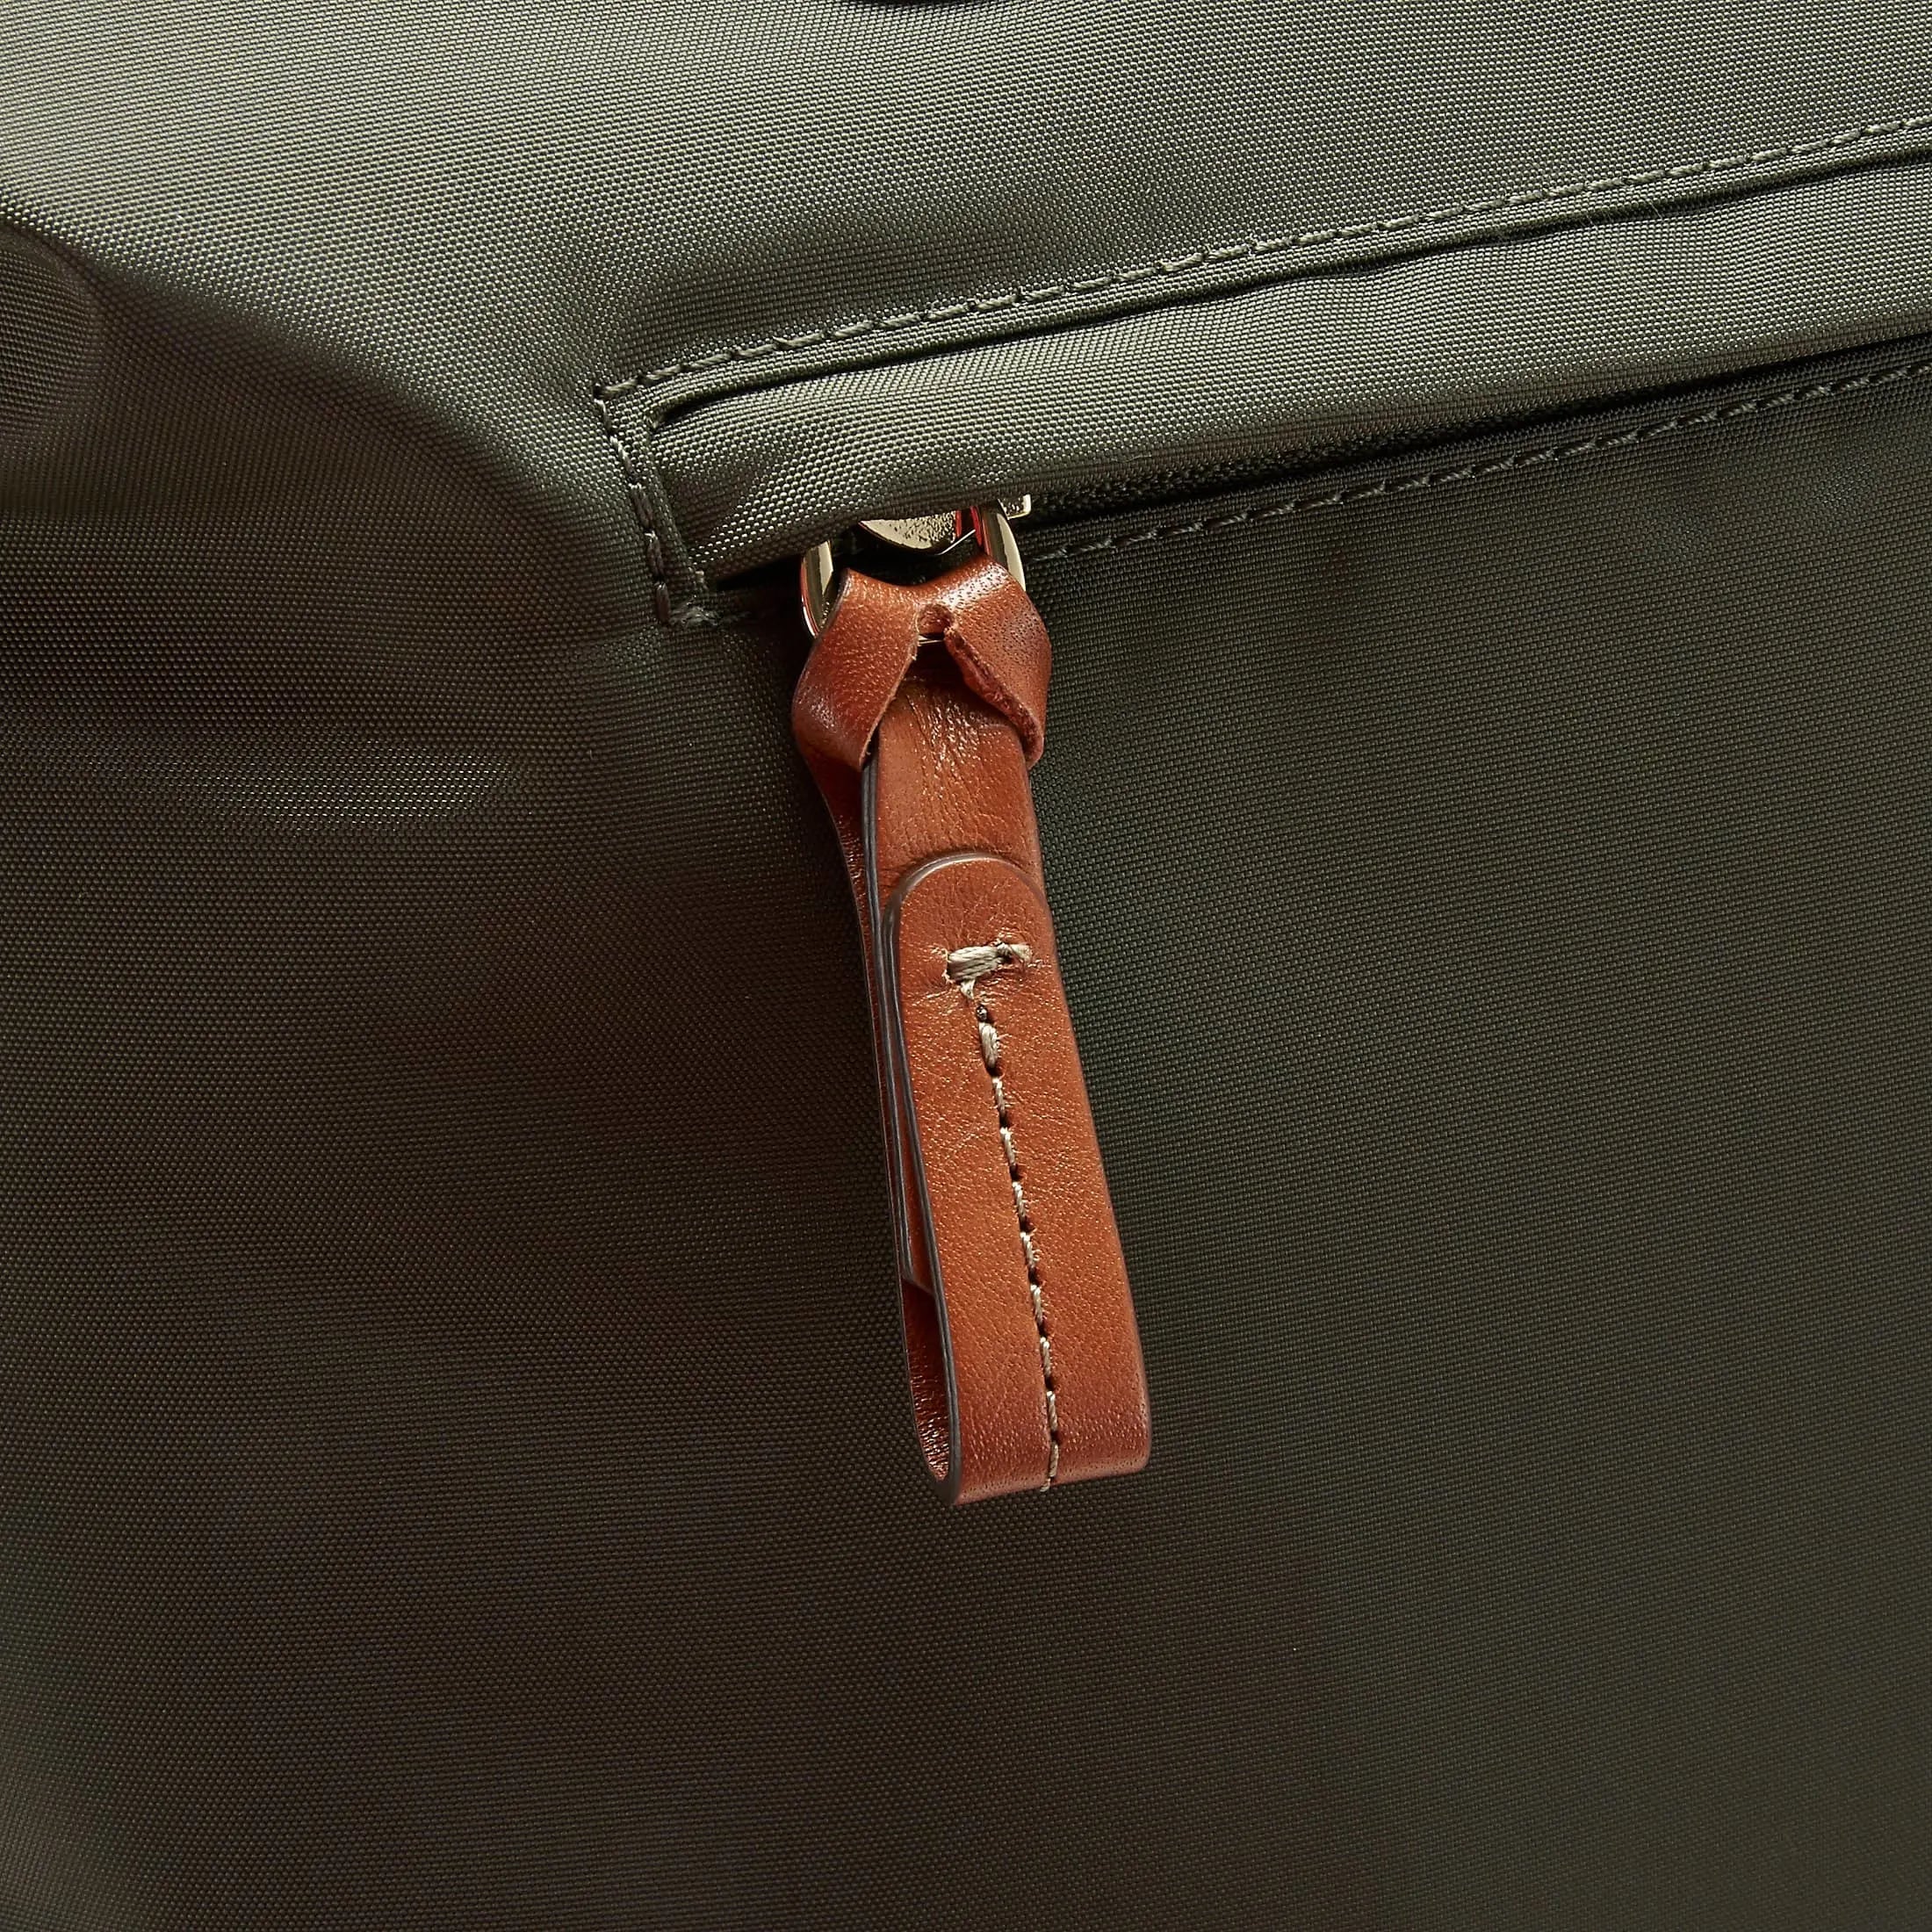 Brics X-Travel Handtasche 38 cm - olive